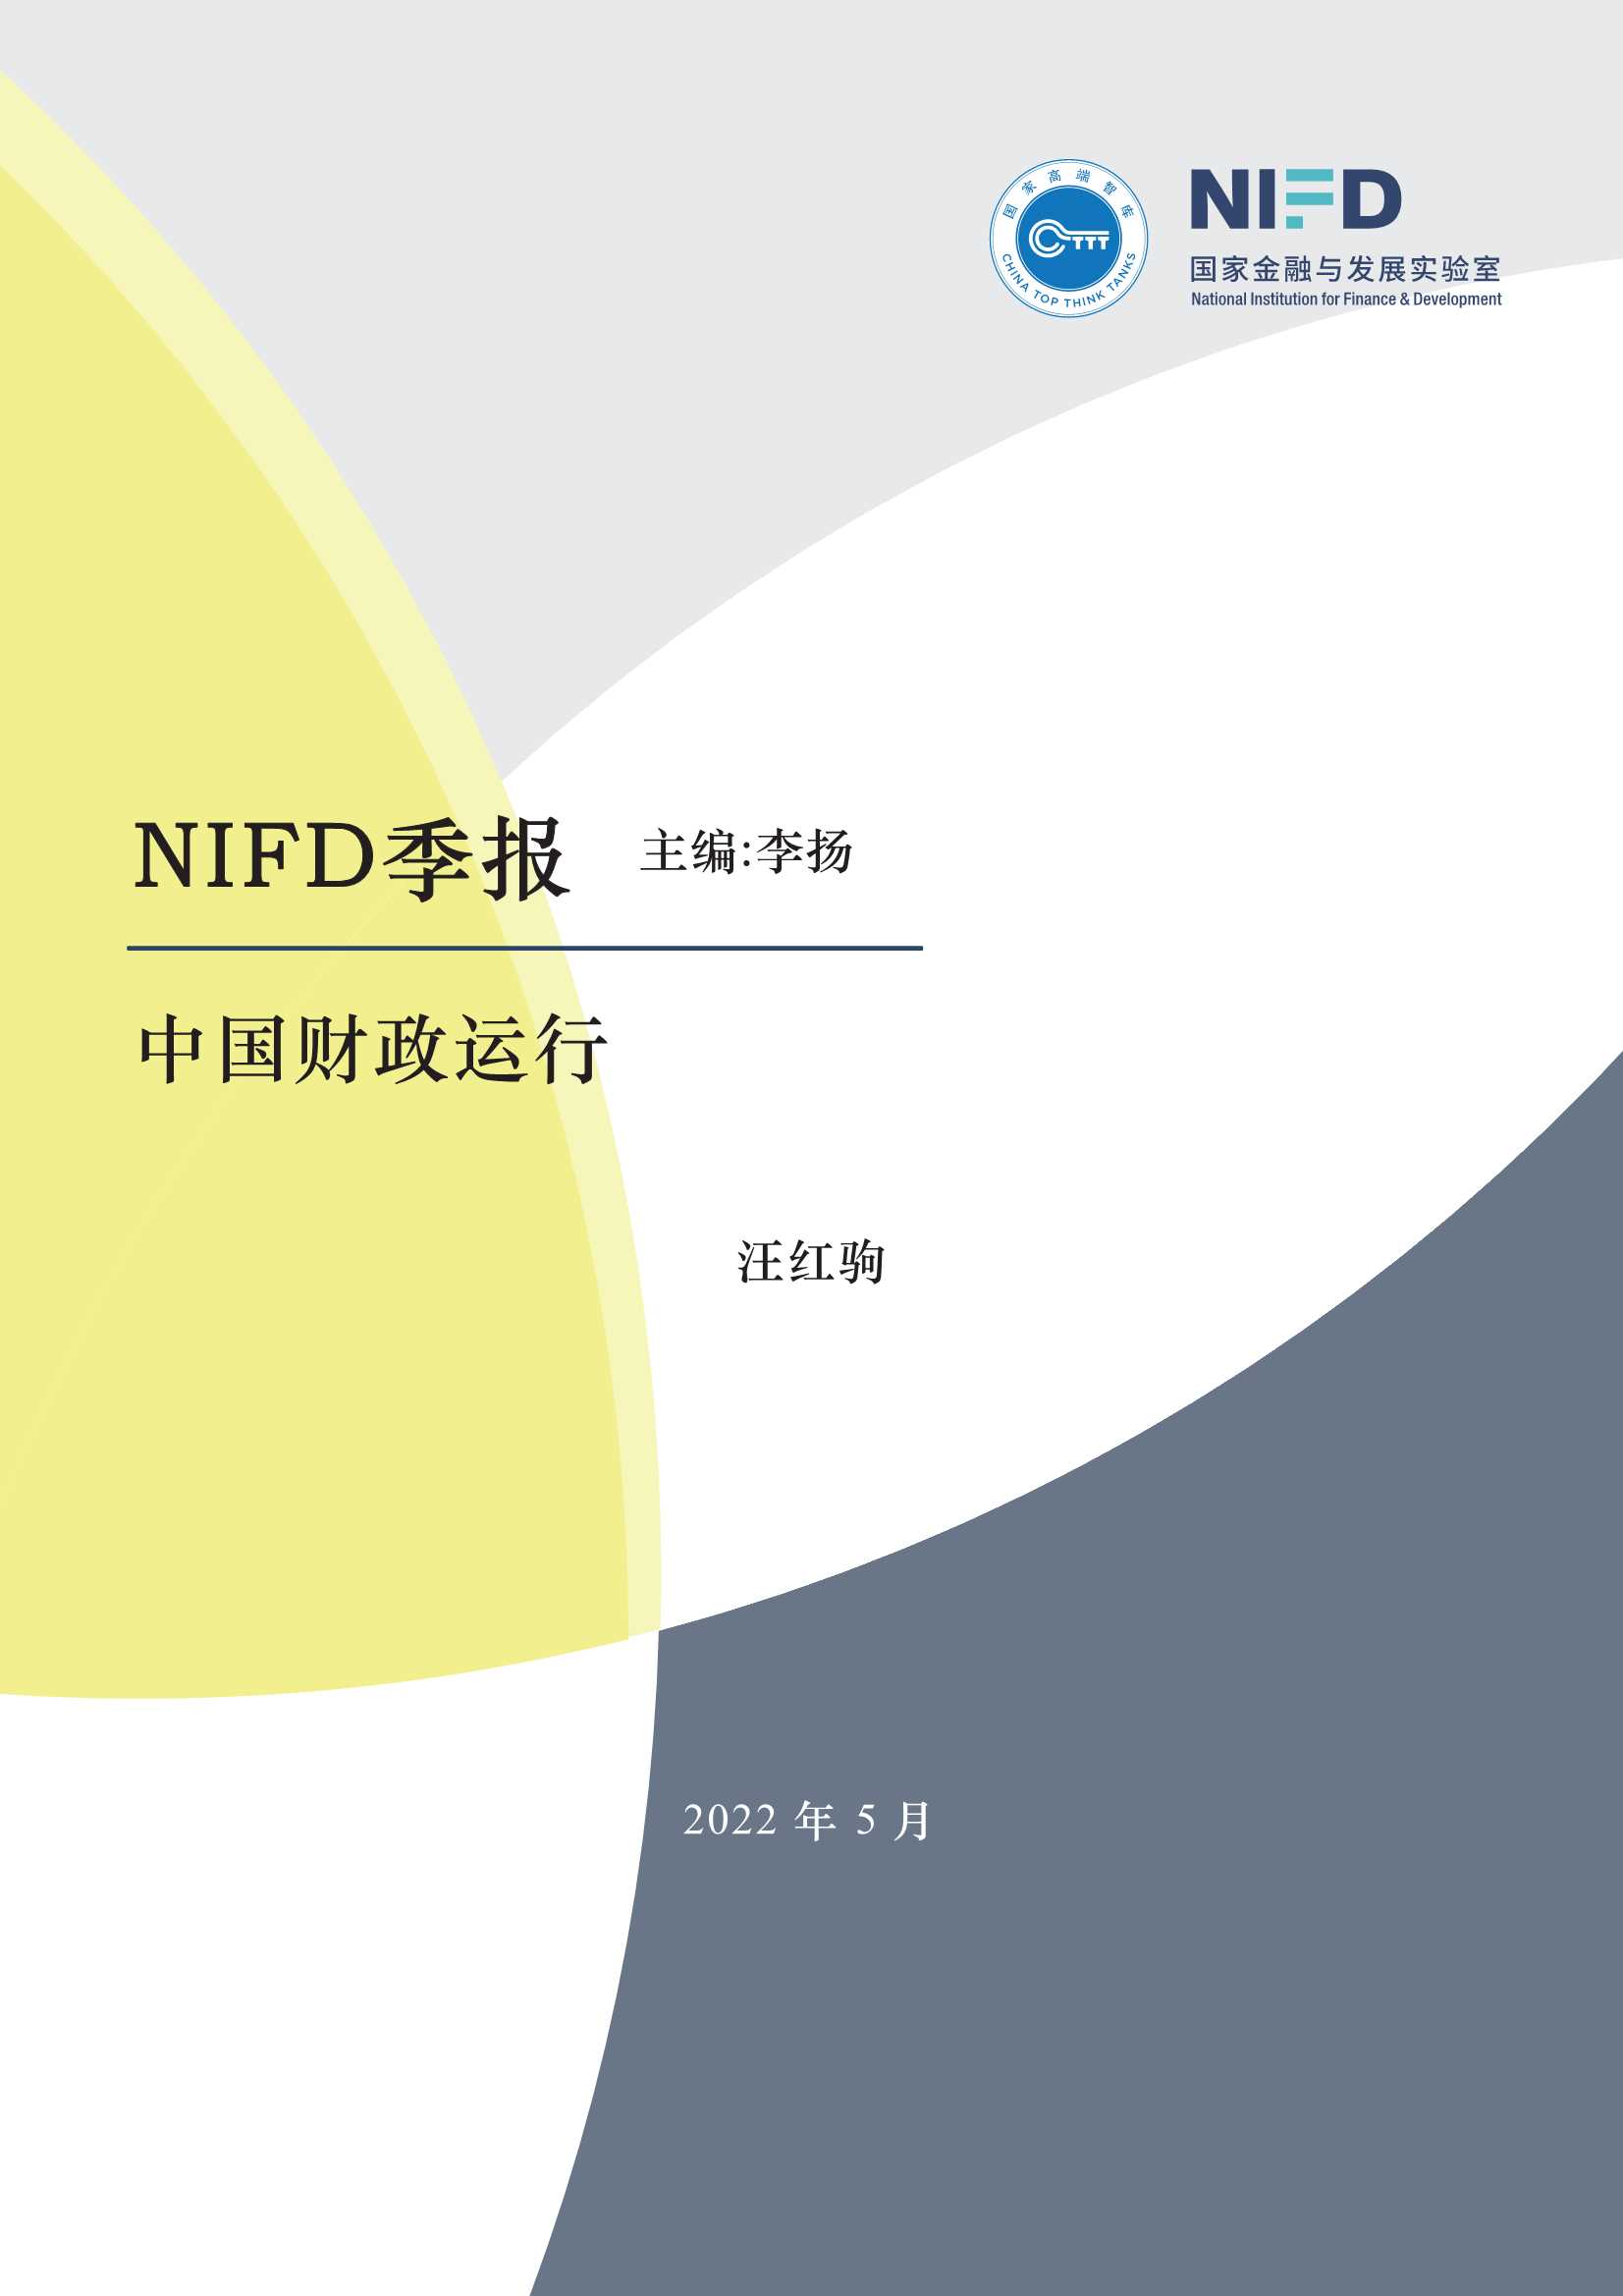 NIFD-经济增长下行风险上升，财政政策加大逆周期调节力度——2022Q1中国财政运行-2022.05-21页